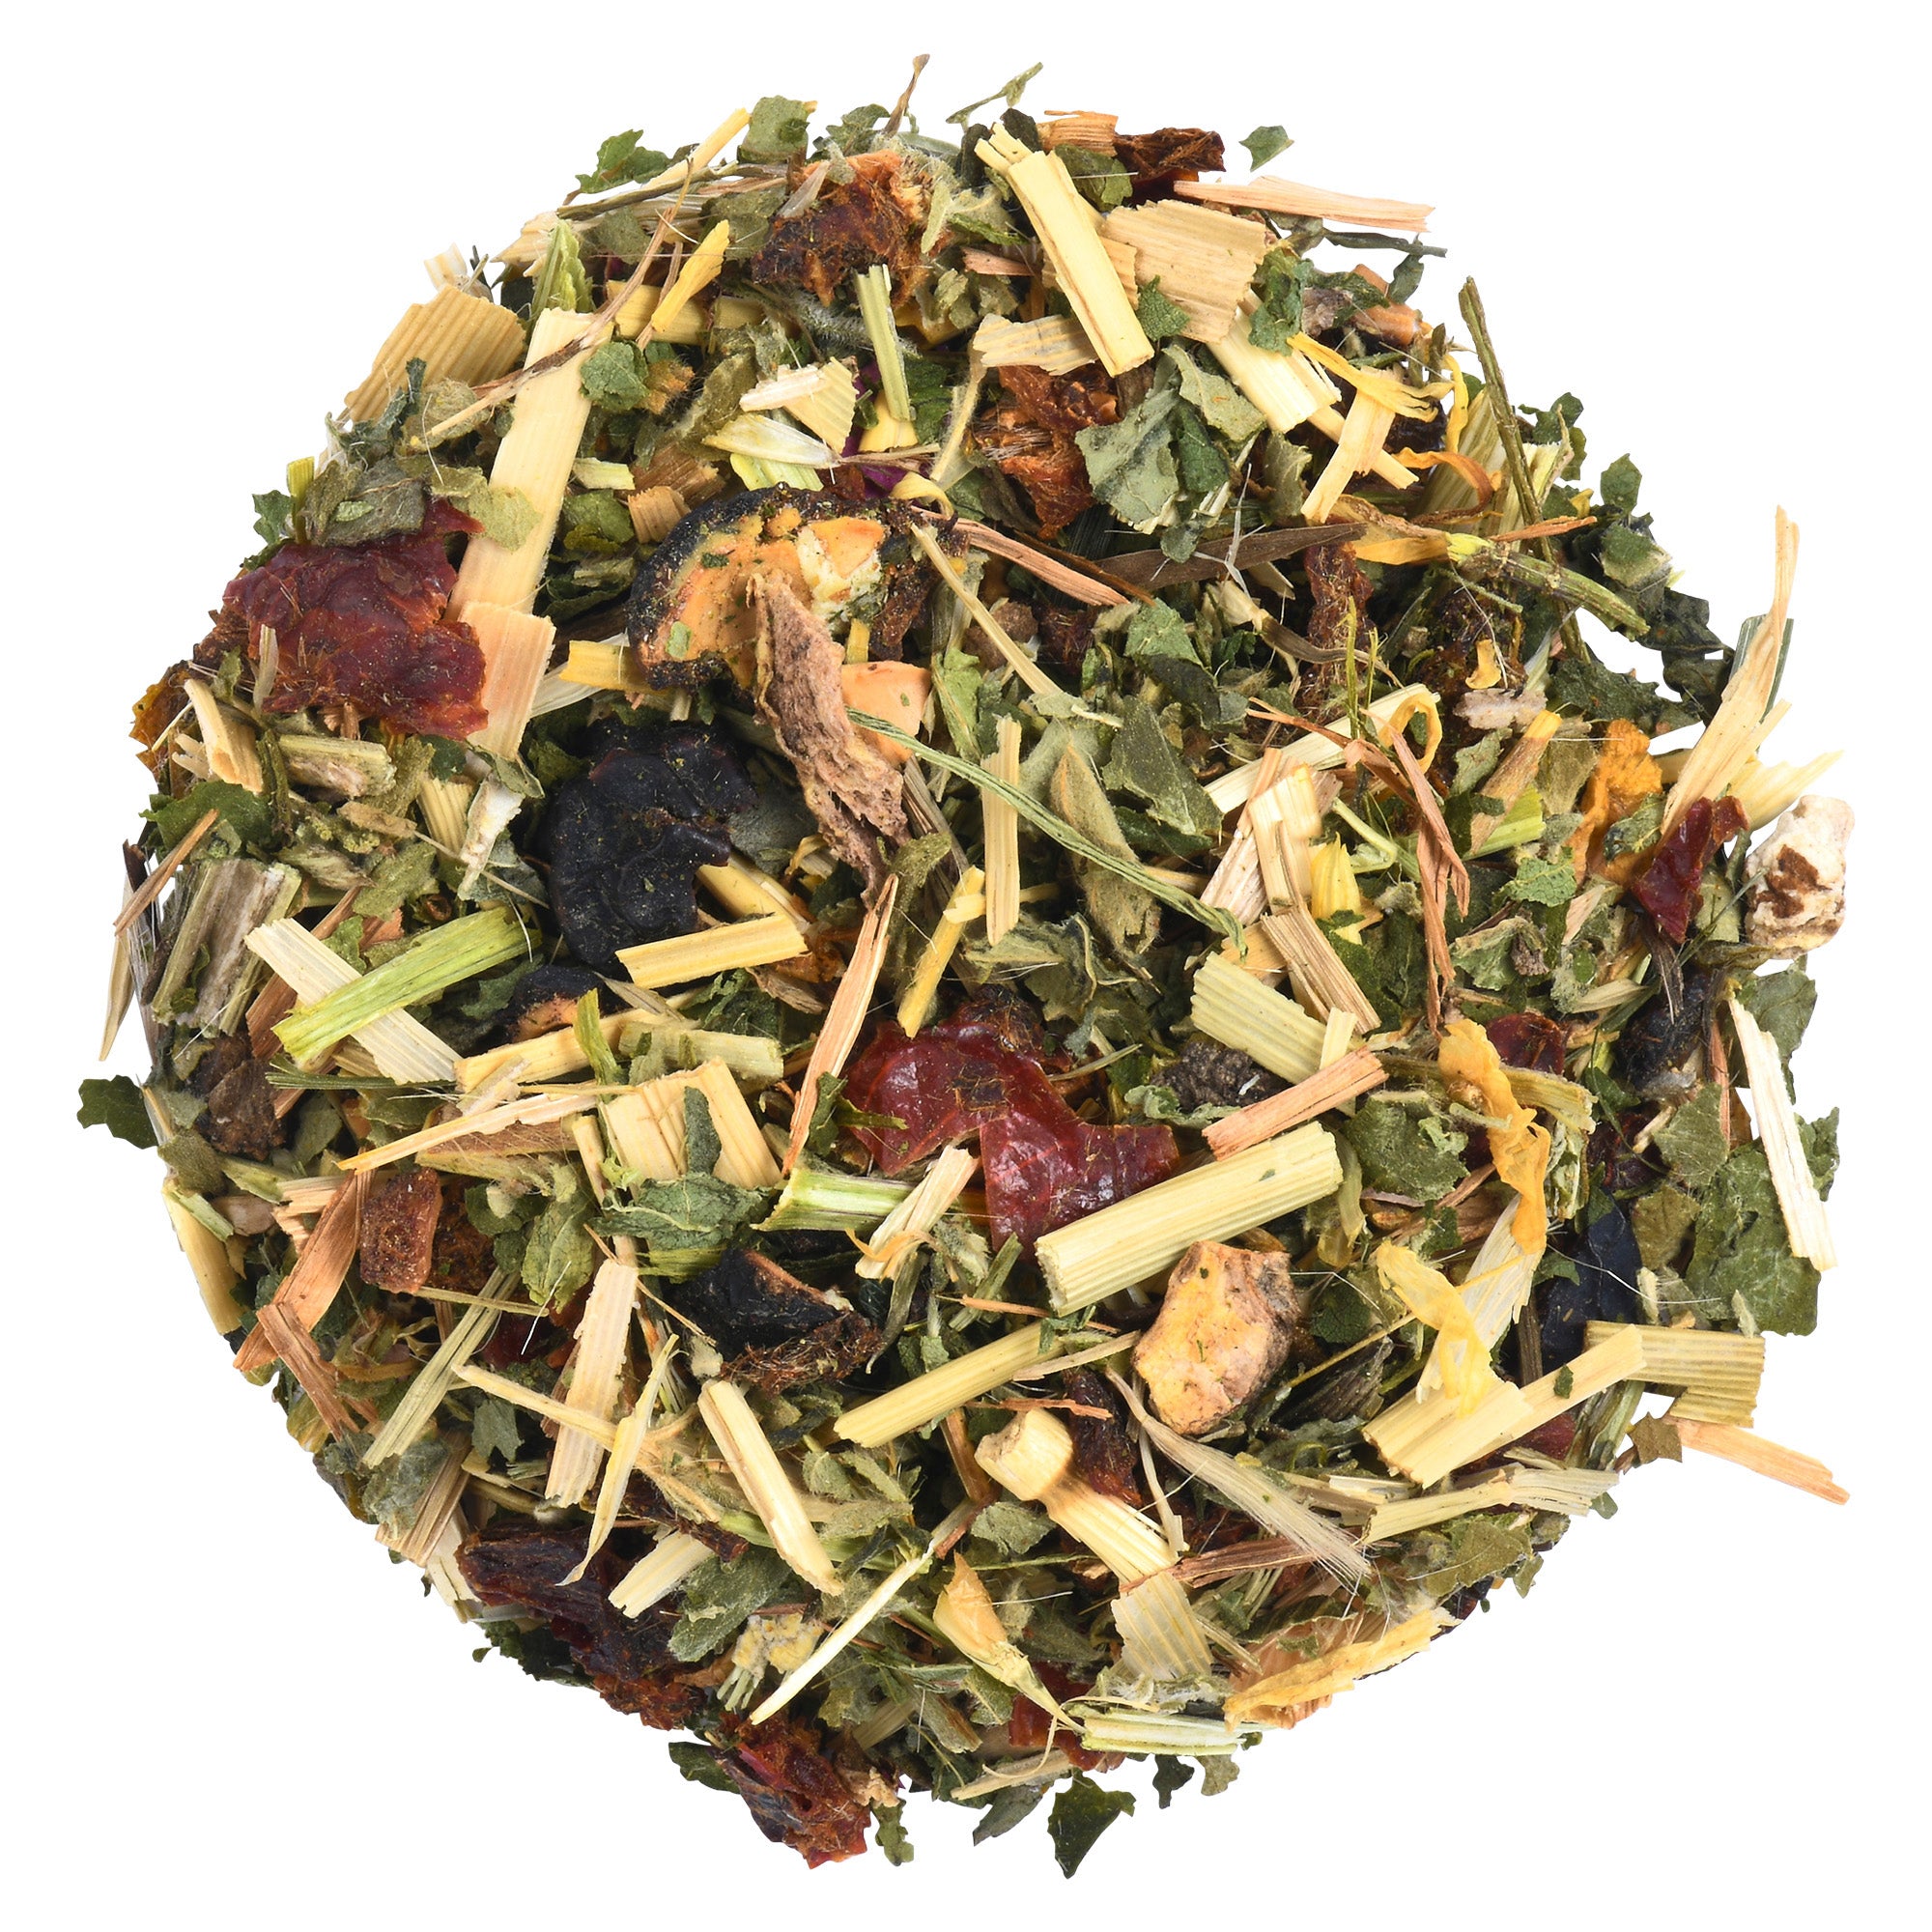 Buy Energy Blend Organic Herbal Tea - 50g/1.76oz | Biokoma